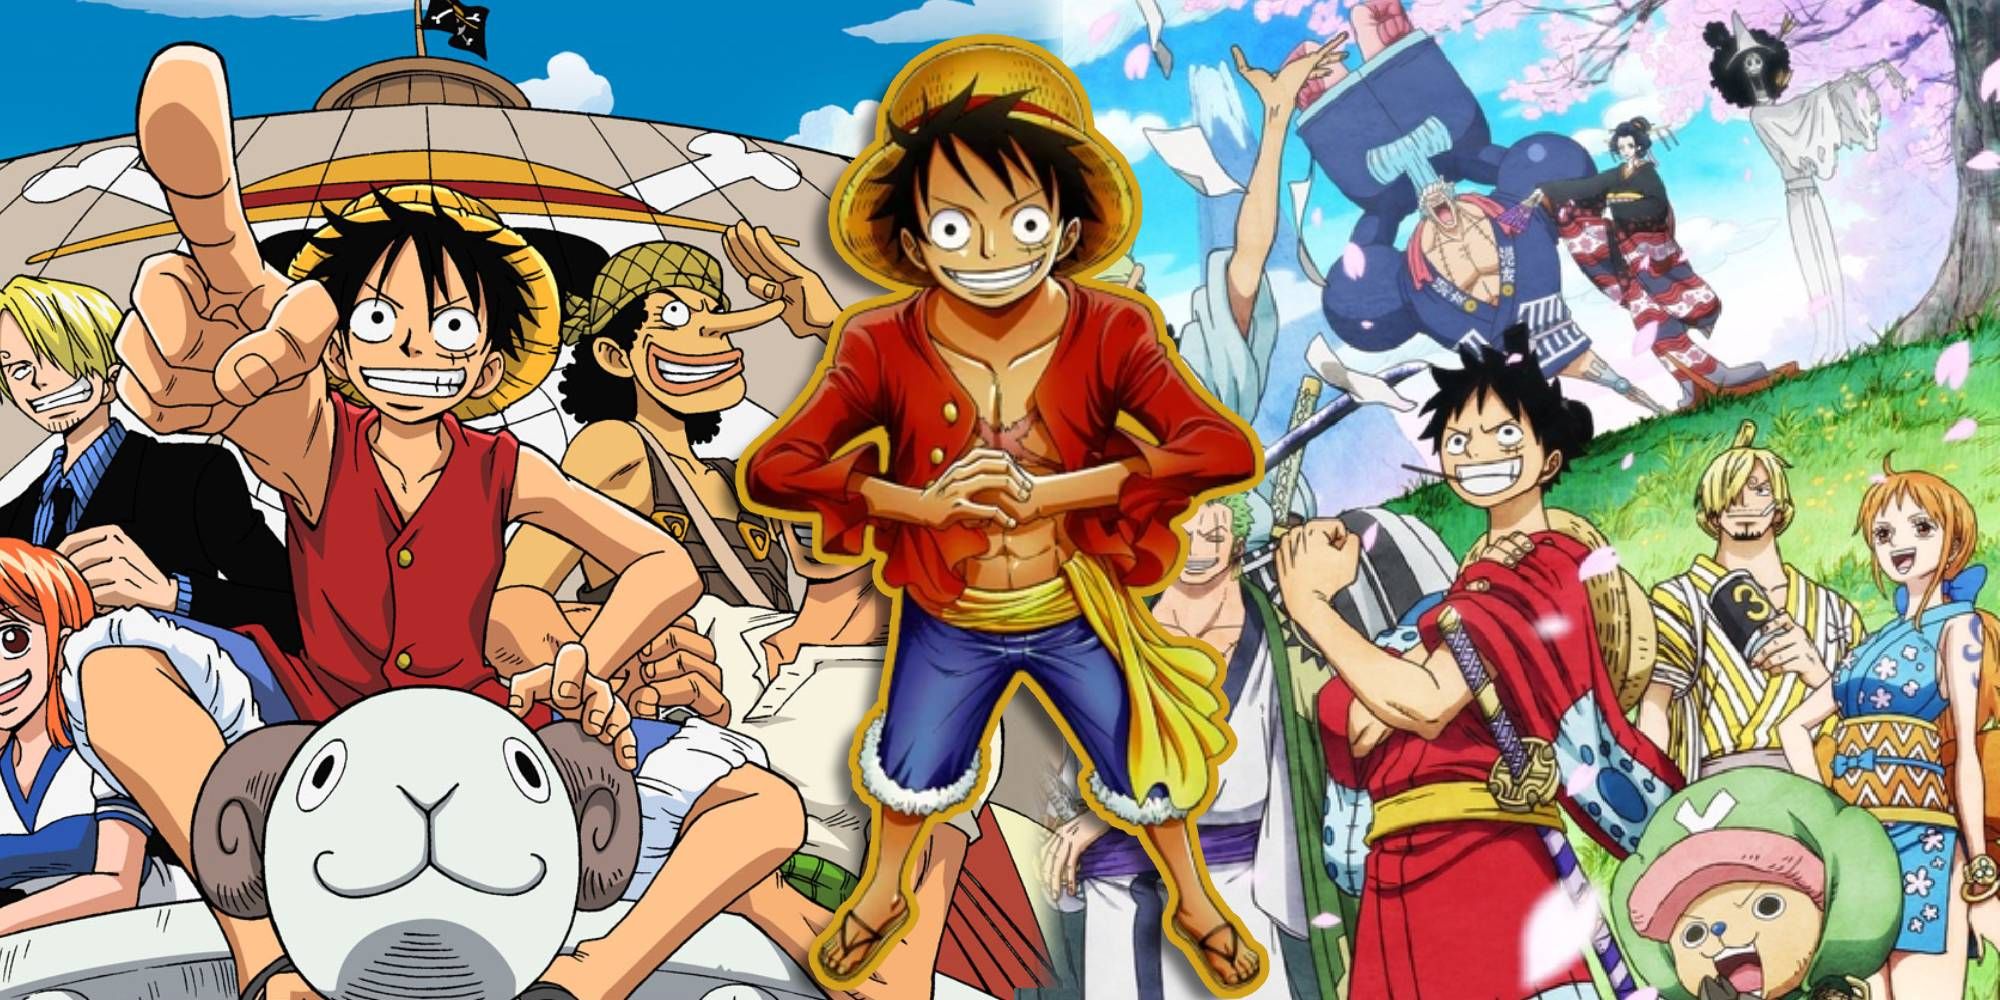 Netflix 'One Piece' Release Date Announcement | Hypebeast